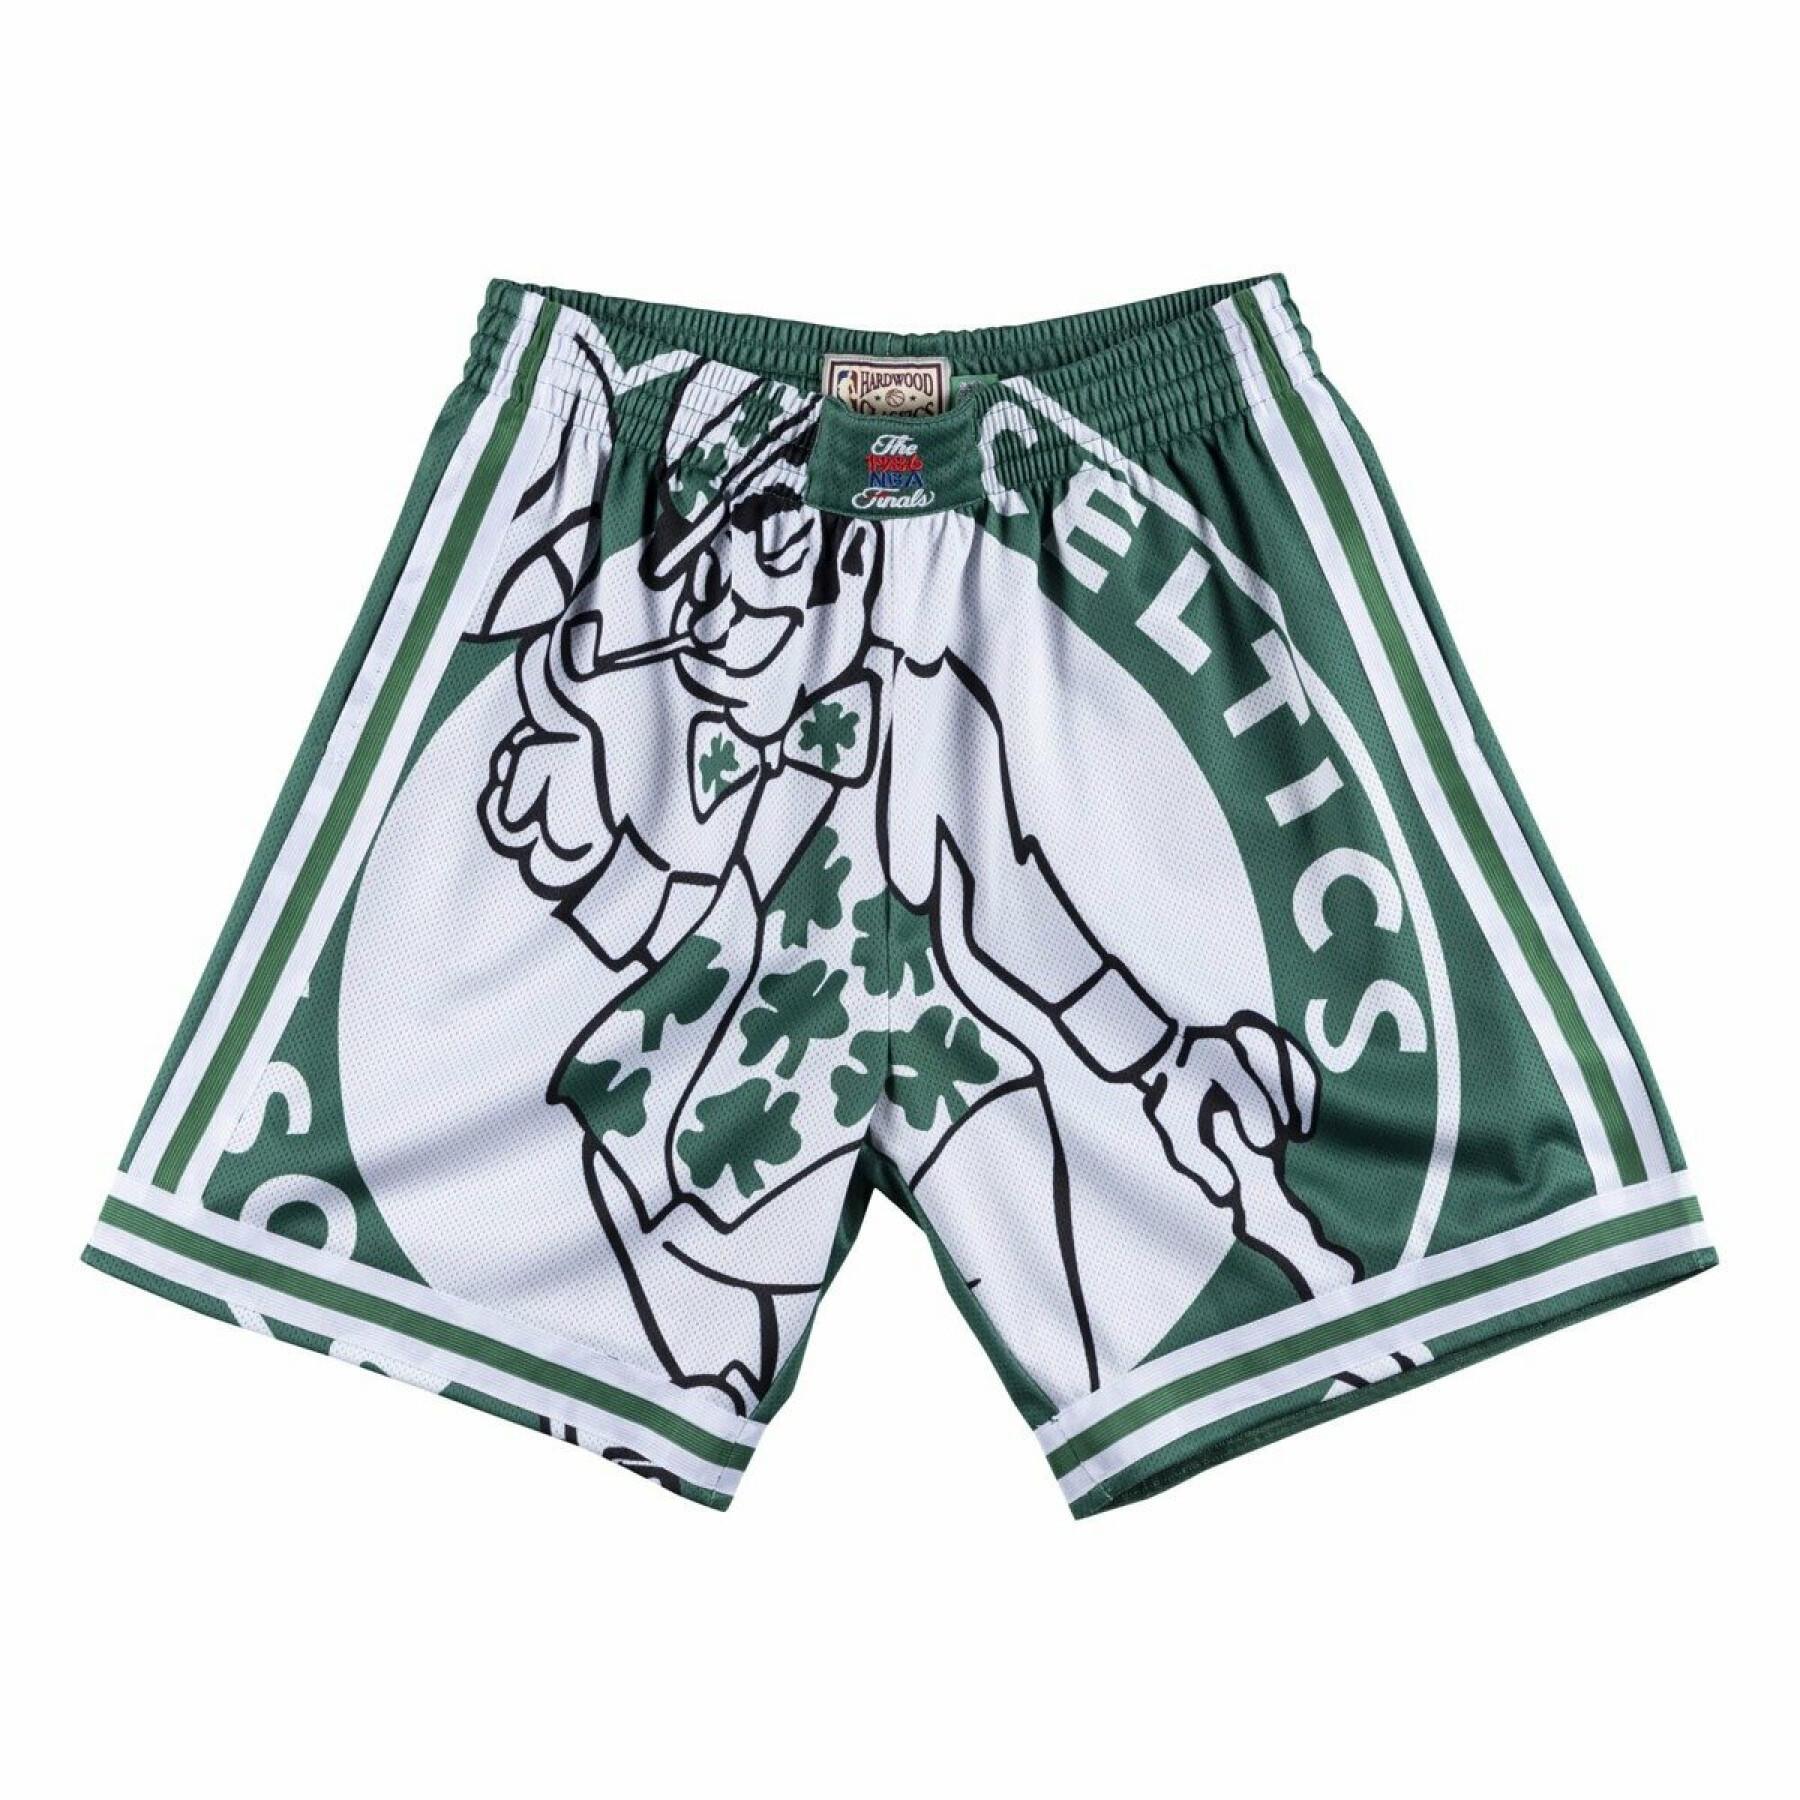 Calções Boston Celtics big face celtics 1985/86